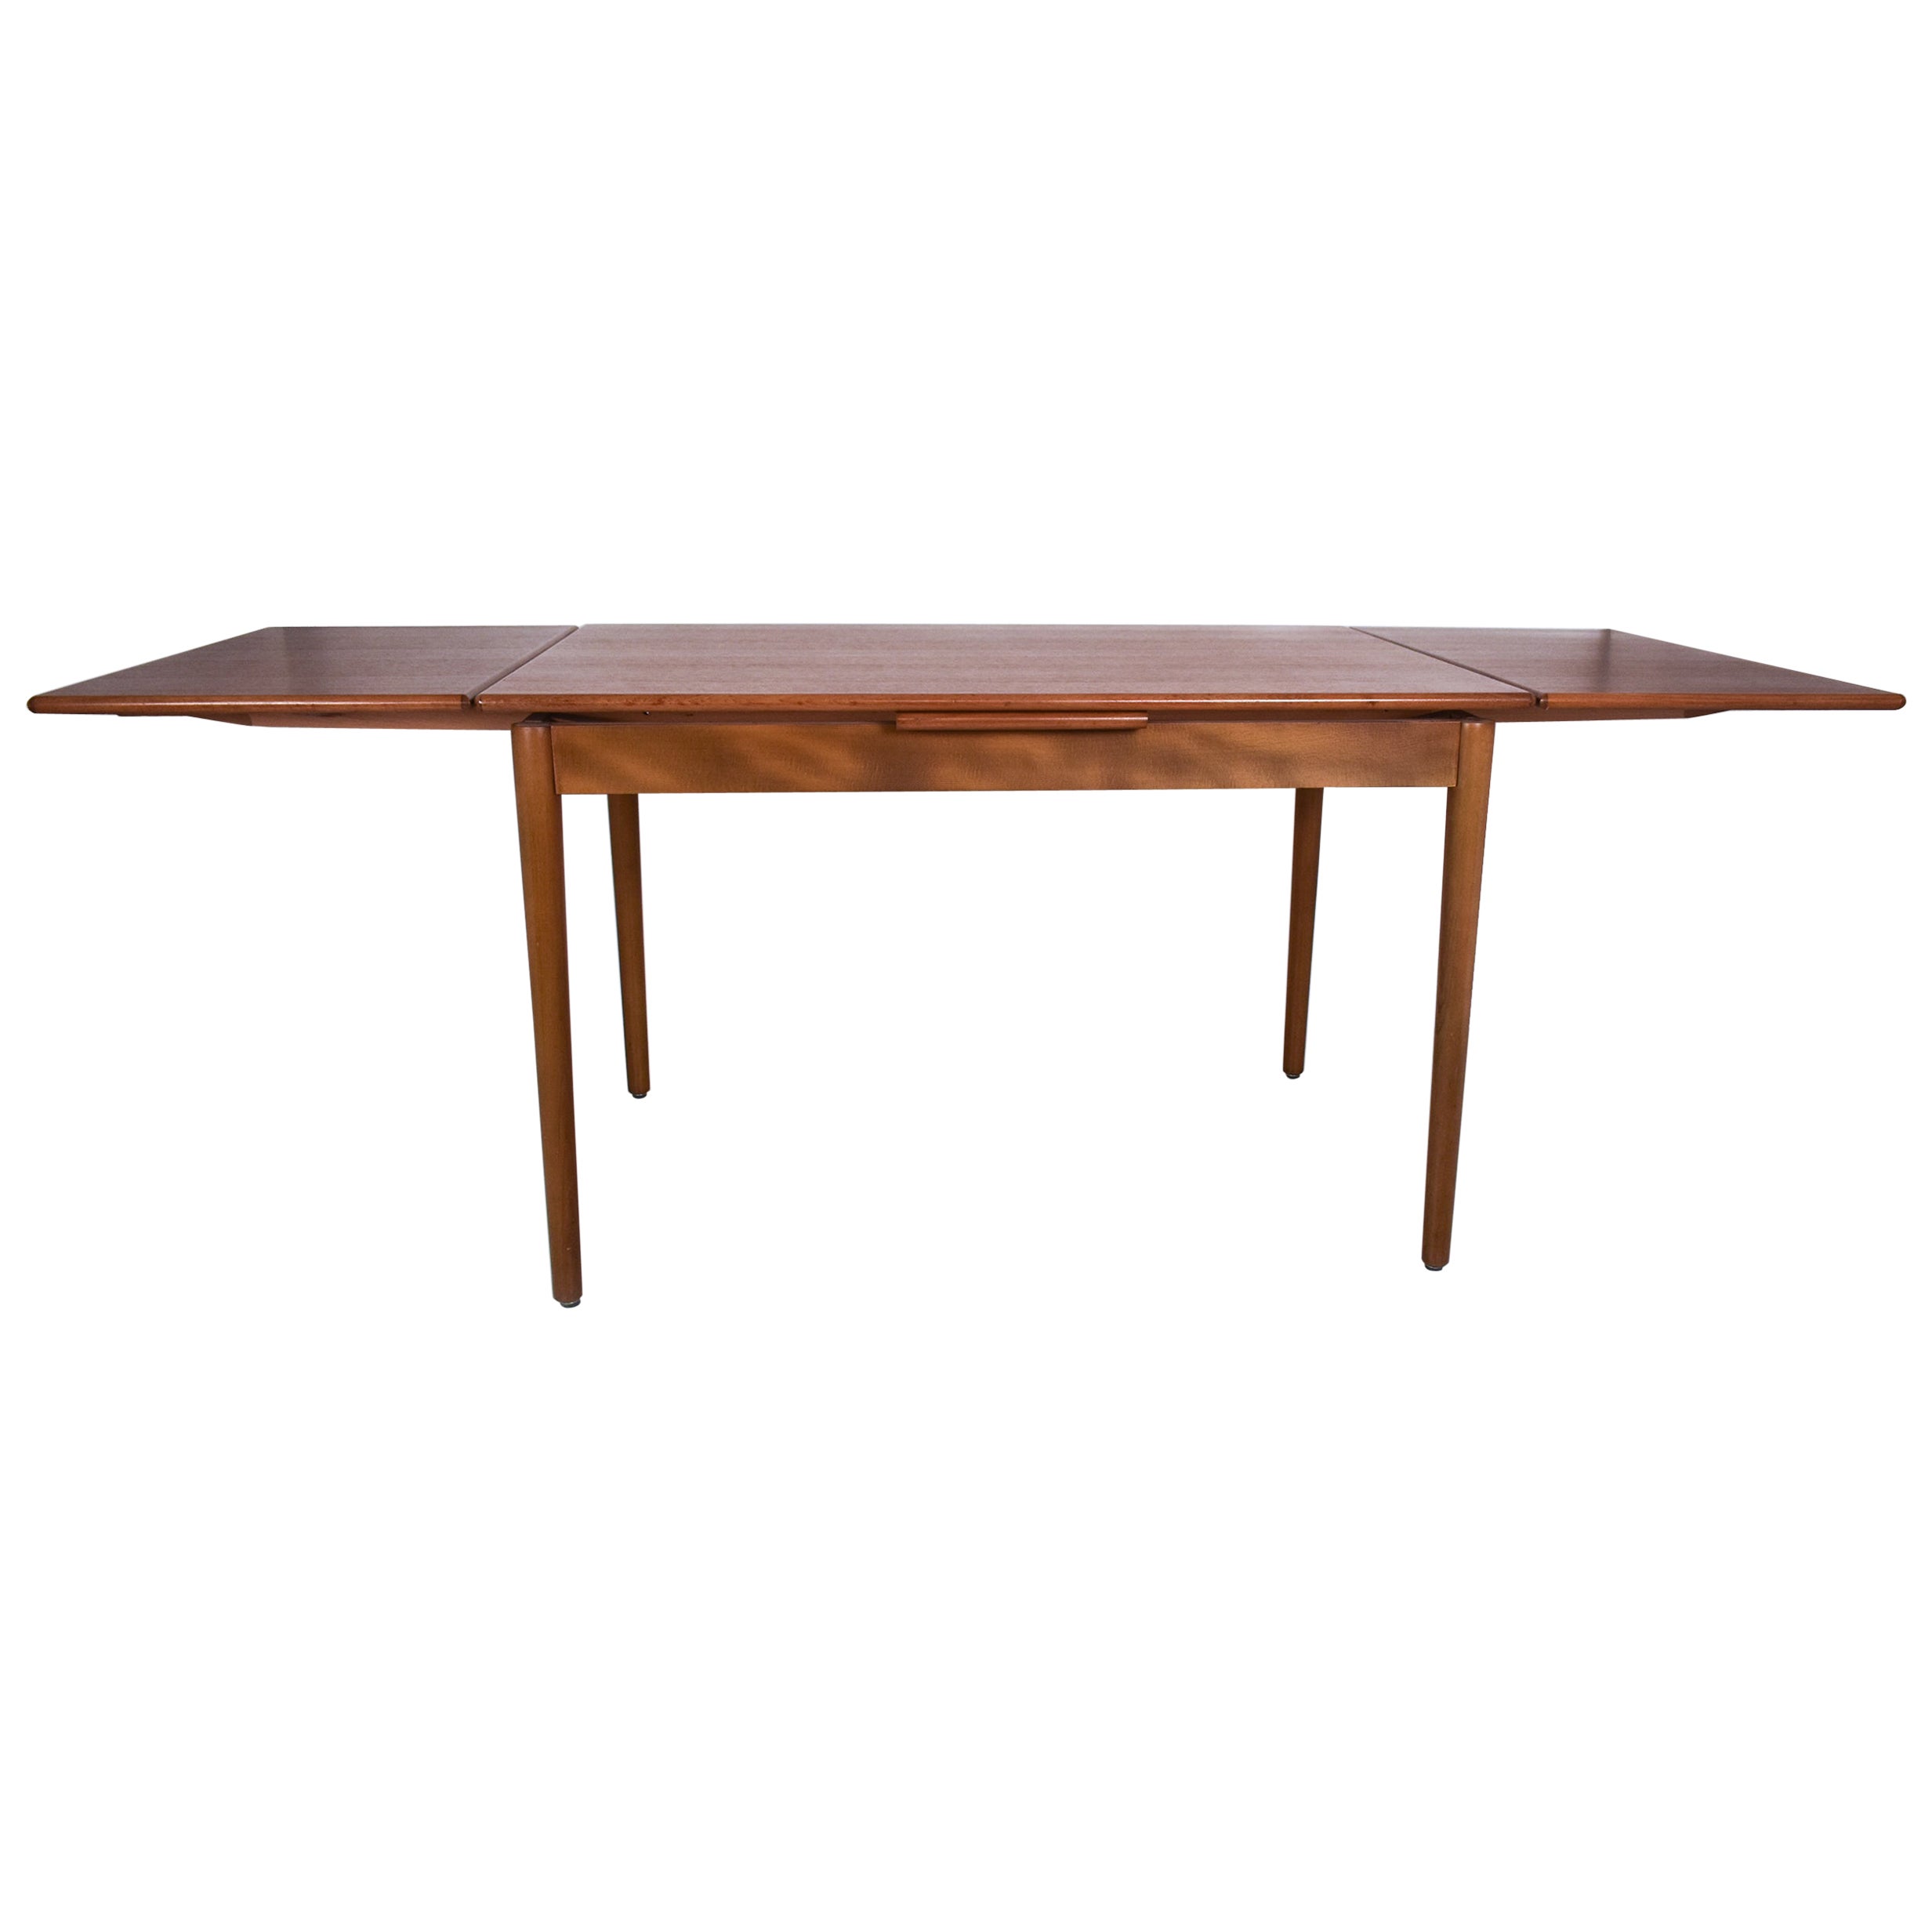 Danish modern draw leaf teak extending dining table  manufactured by AM Møbler  For Sale